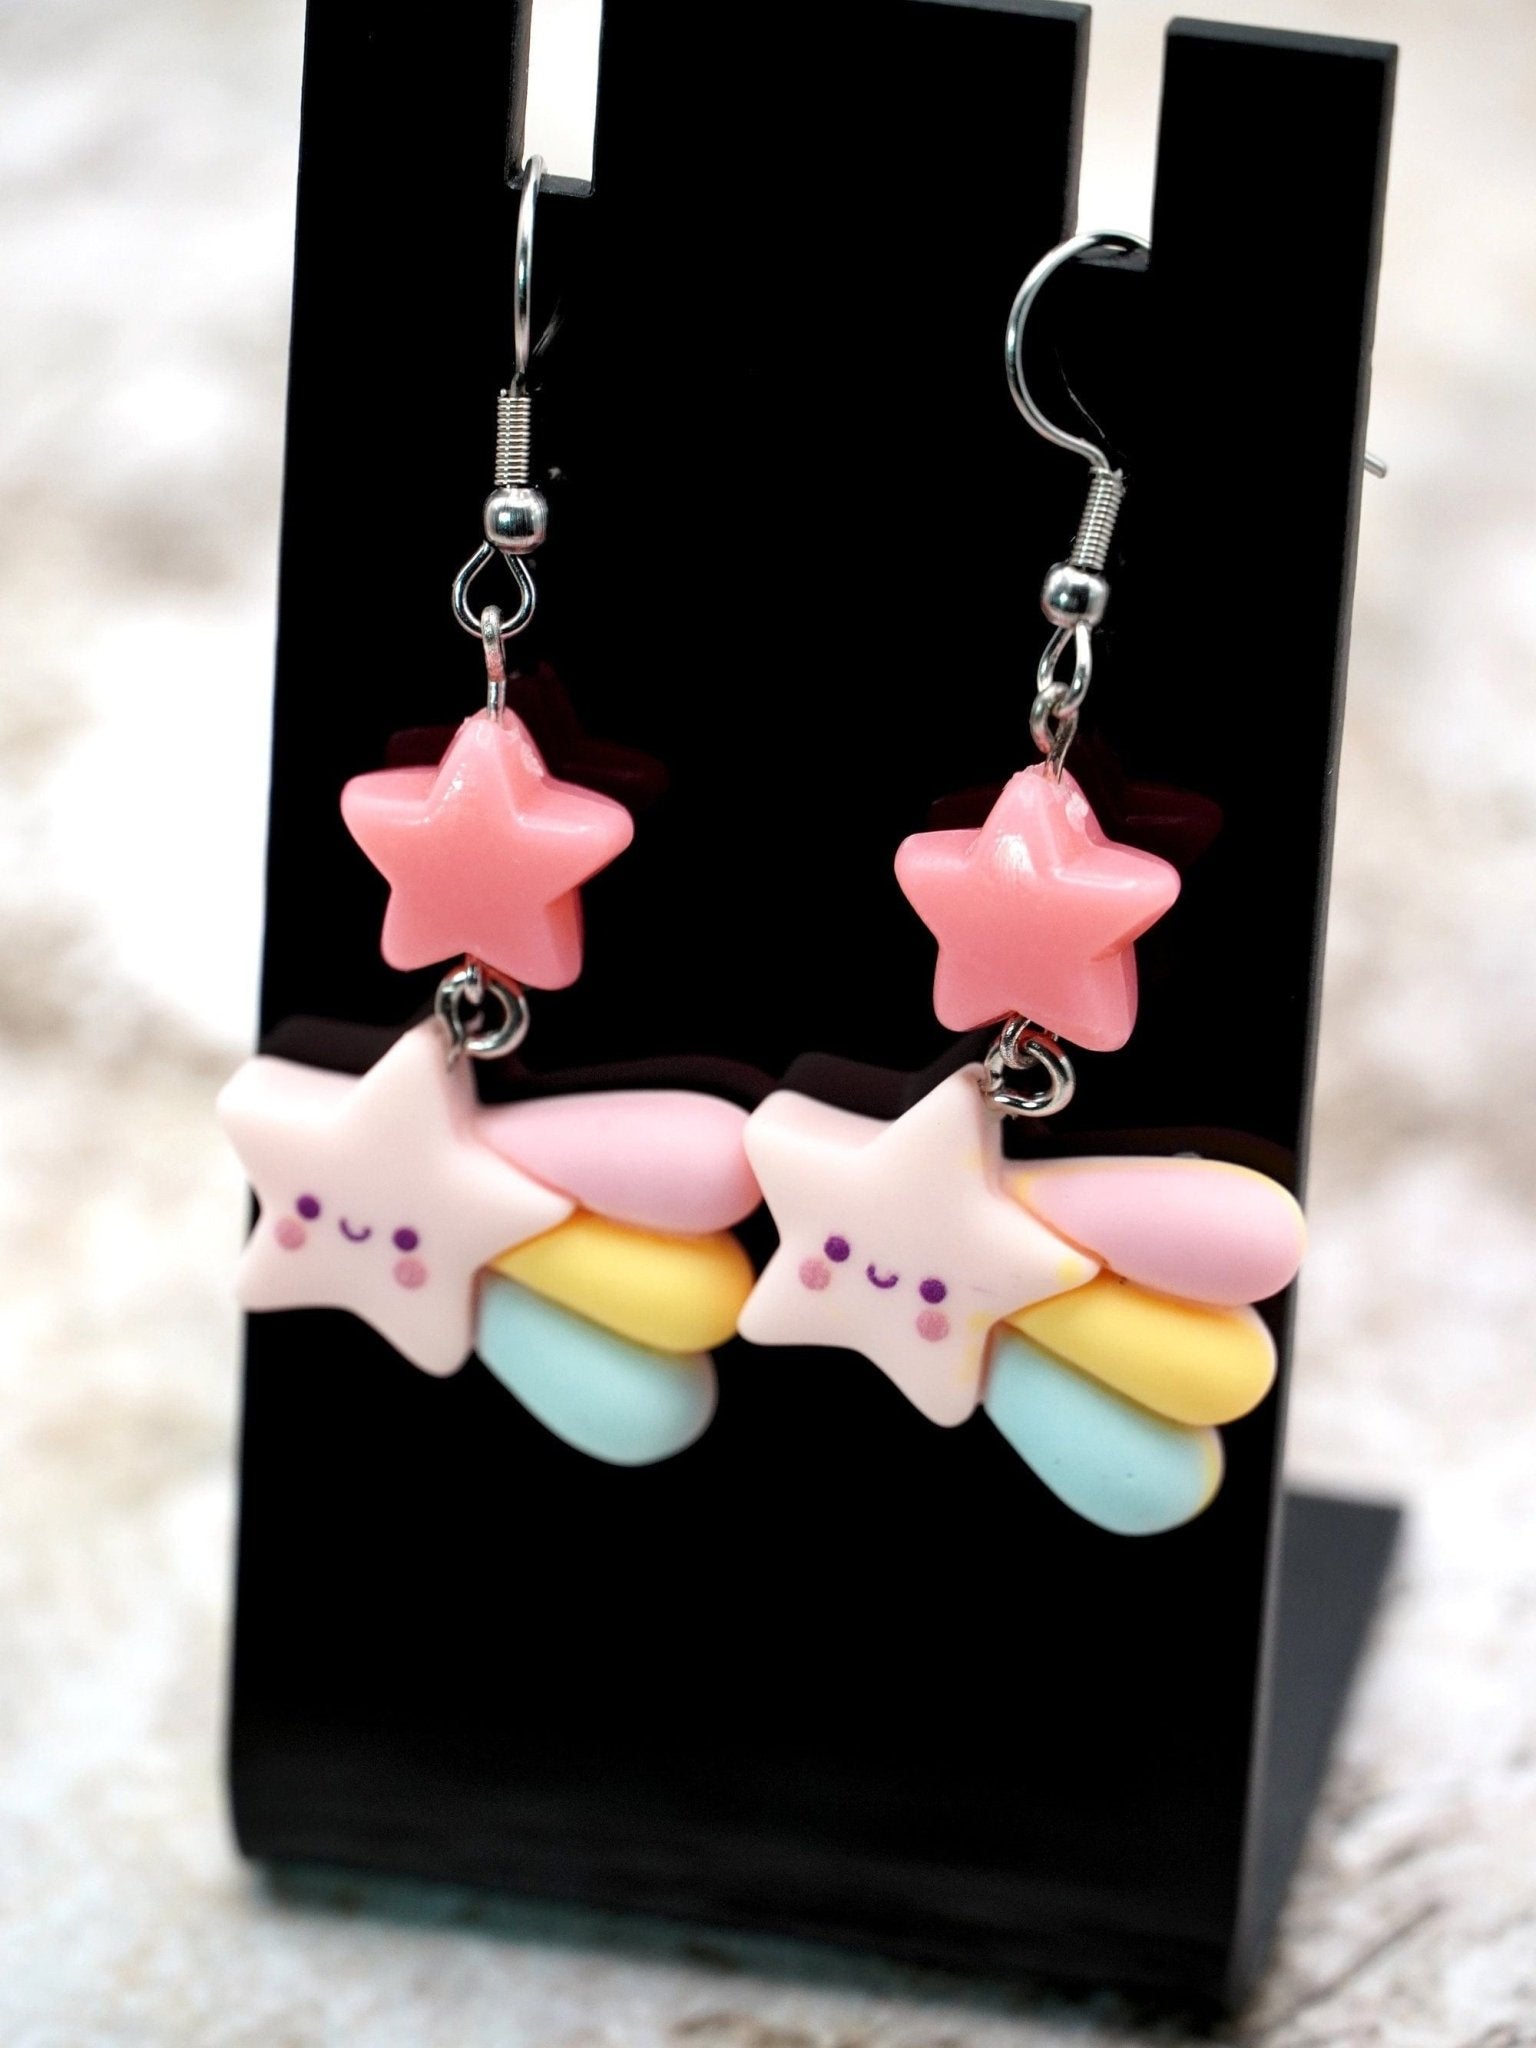 Shooting Star Earrings and Mystery Blind Bag Pair of Earrings, Cute Spring Fashion Earrings - Dekowaii Jewelry Company